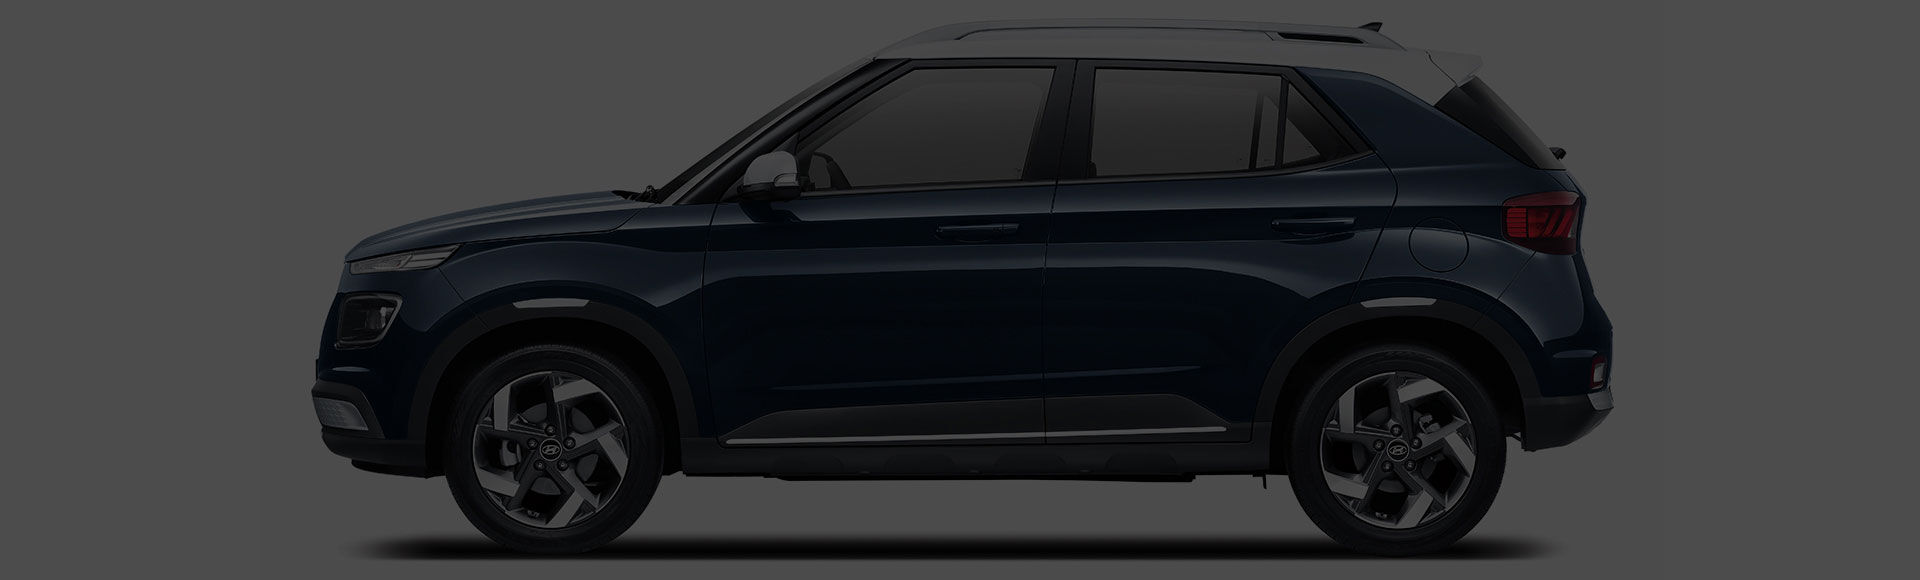 VENUE Design | SUV - Hyundai Worldwide